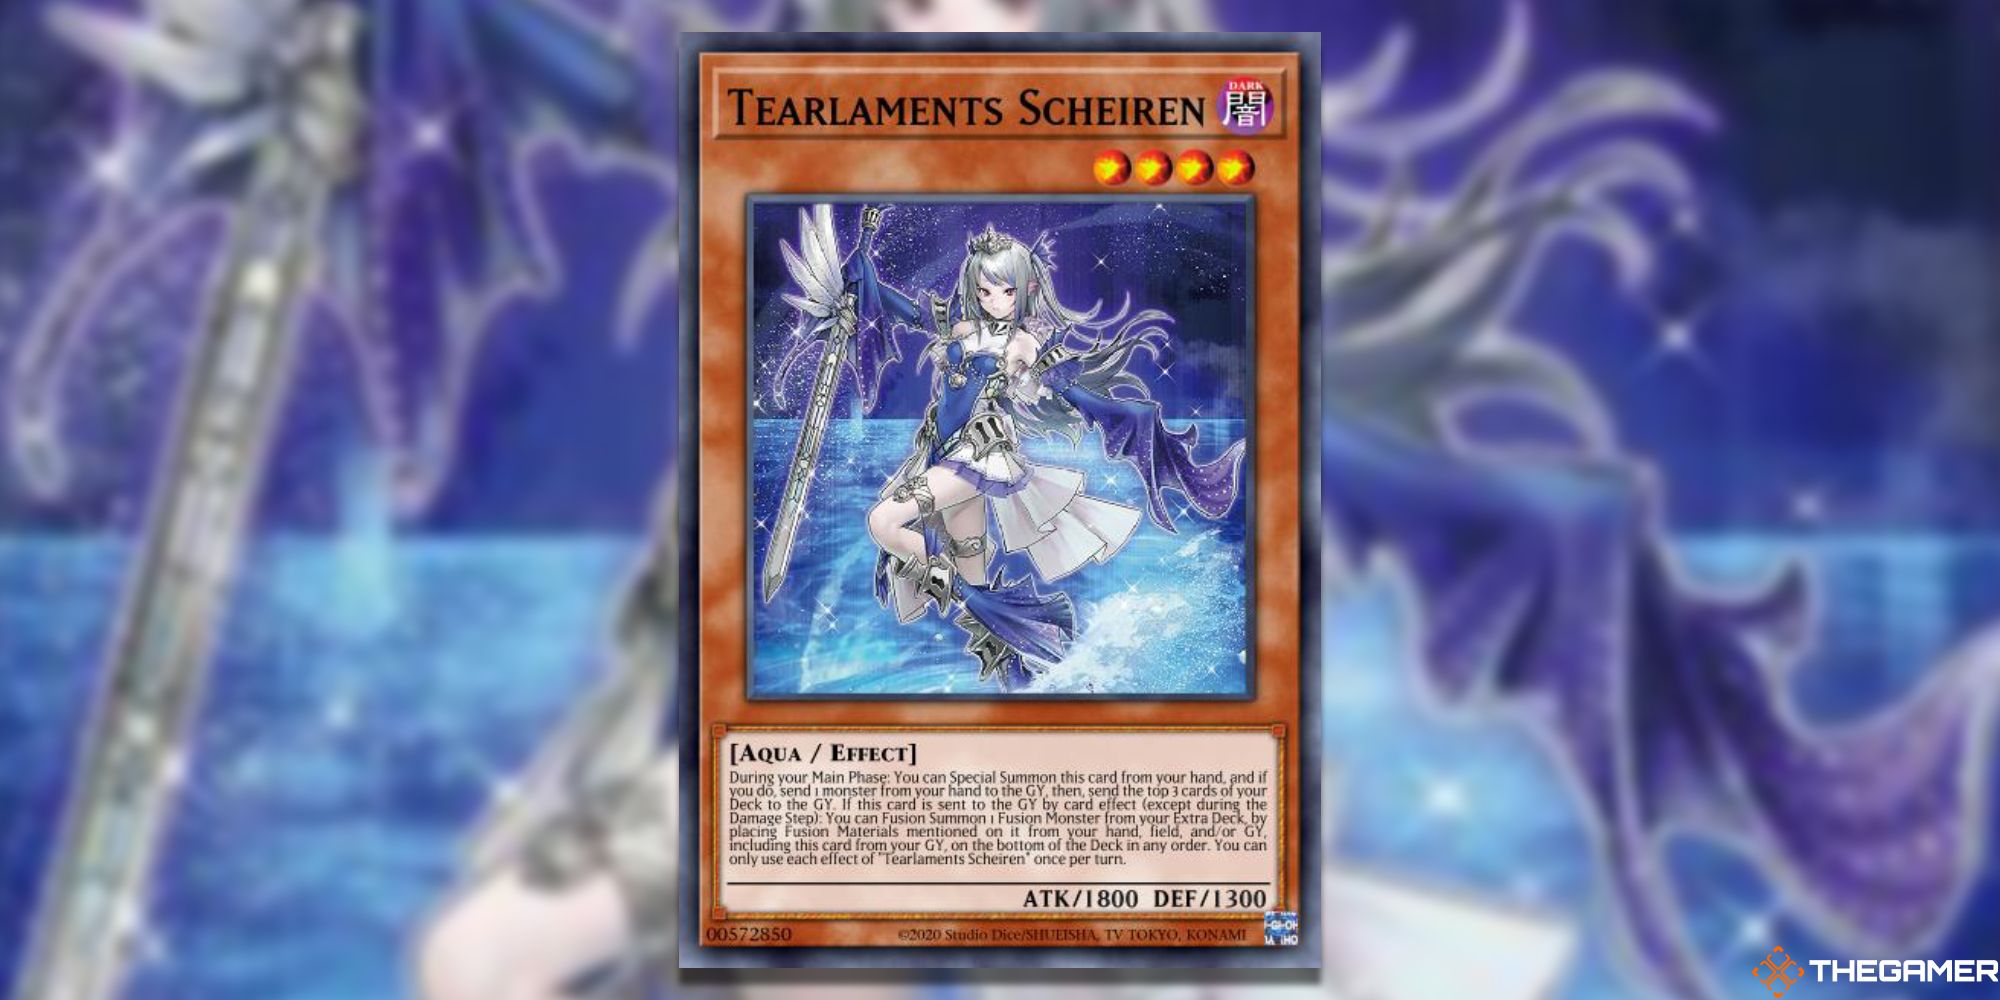 Tiaraments Shailen Full Card with Gauss Blur from Yu-Gi-Oh!master duel